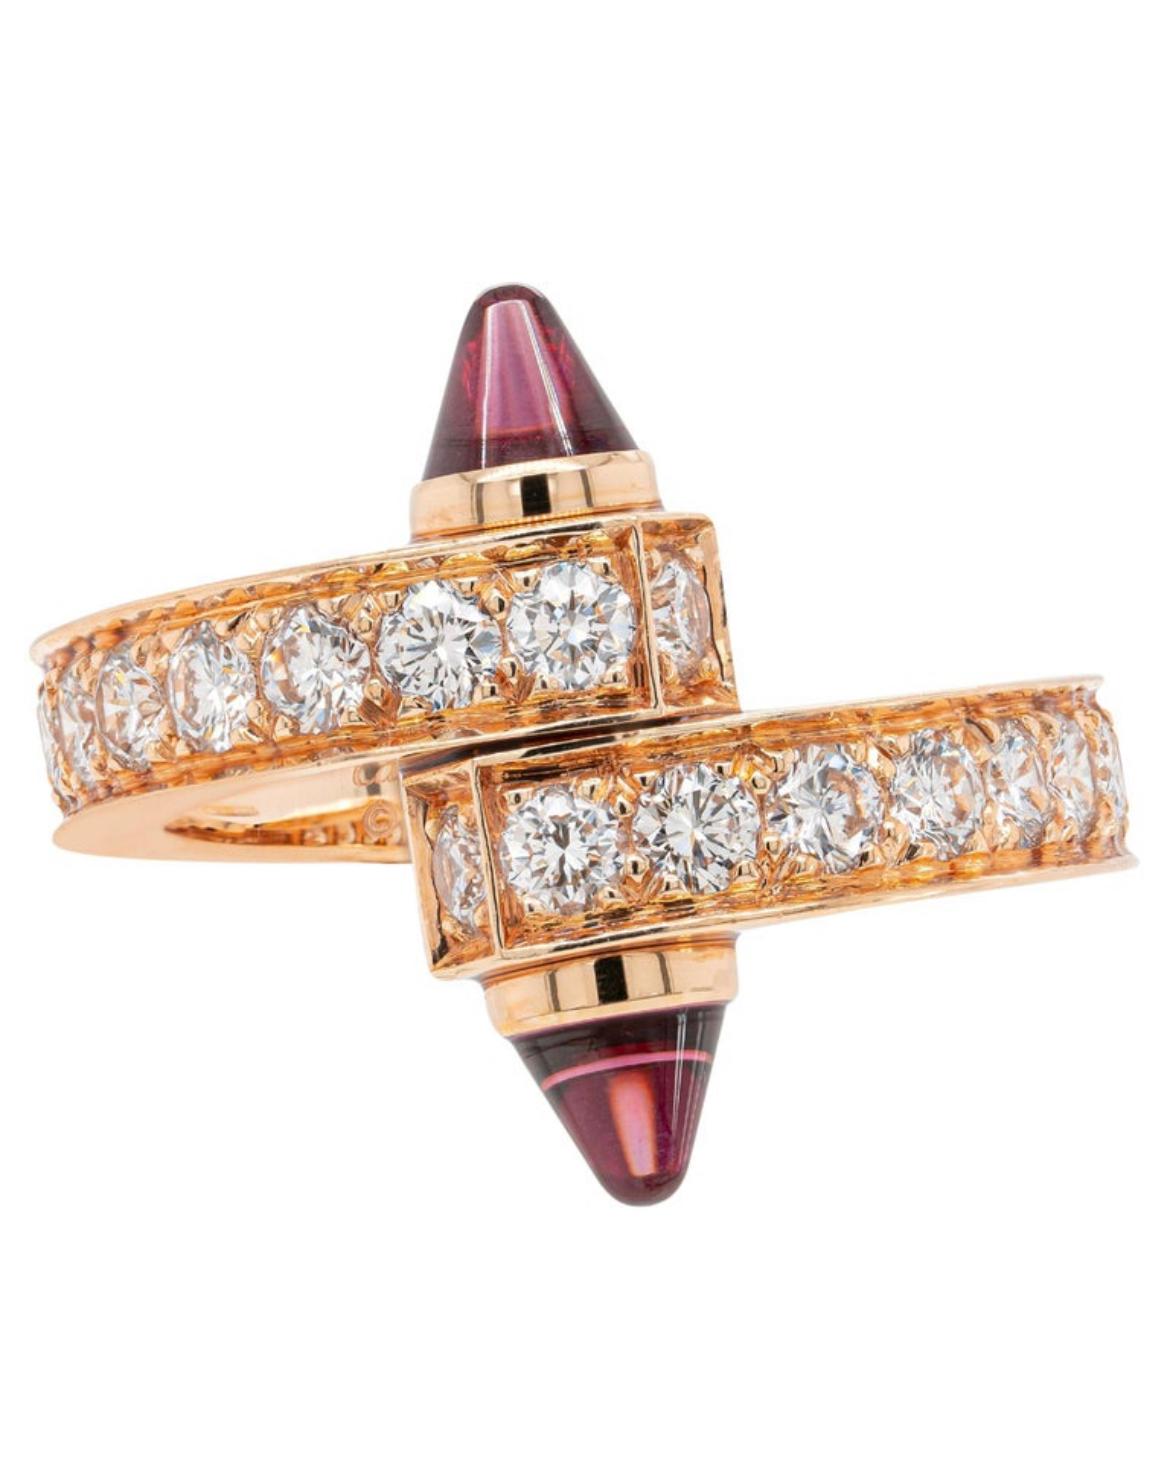 Women's or Men's Cartier Menotte 18ct Rose Gold Diamond and Pink Tourmaline Bypass Ring